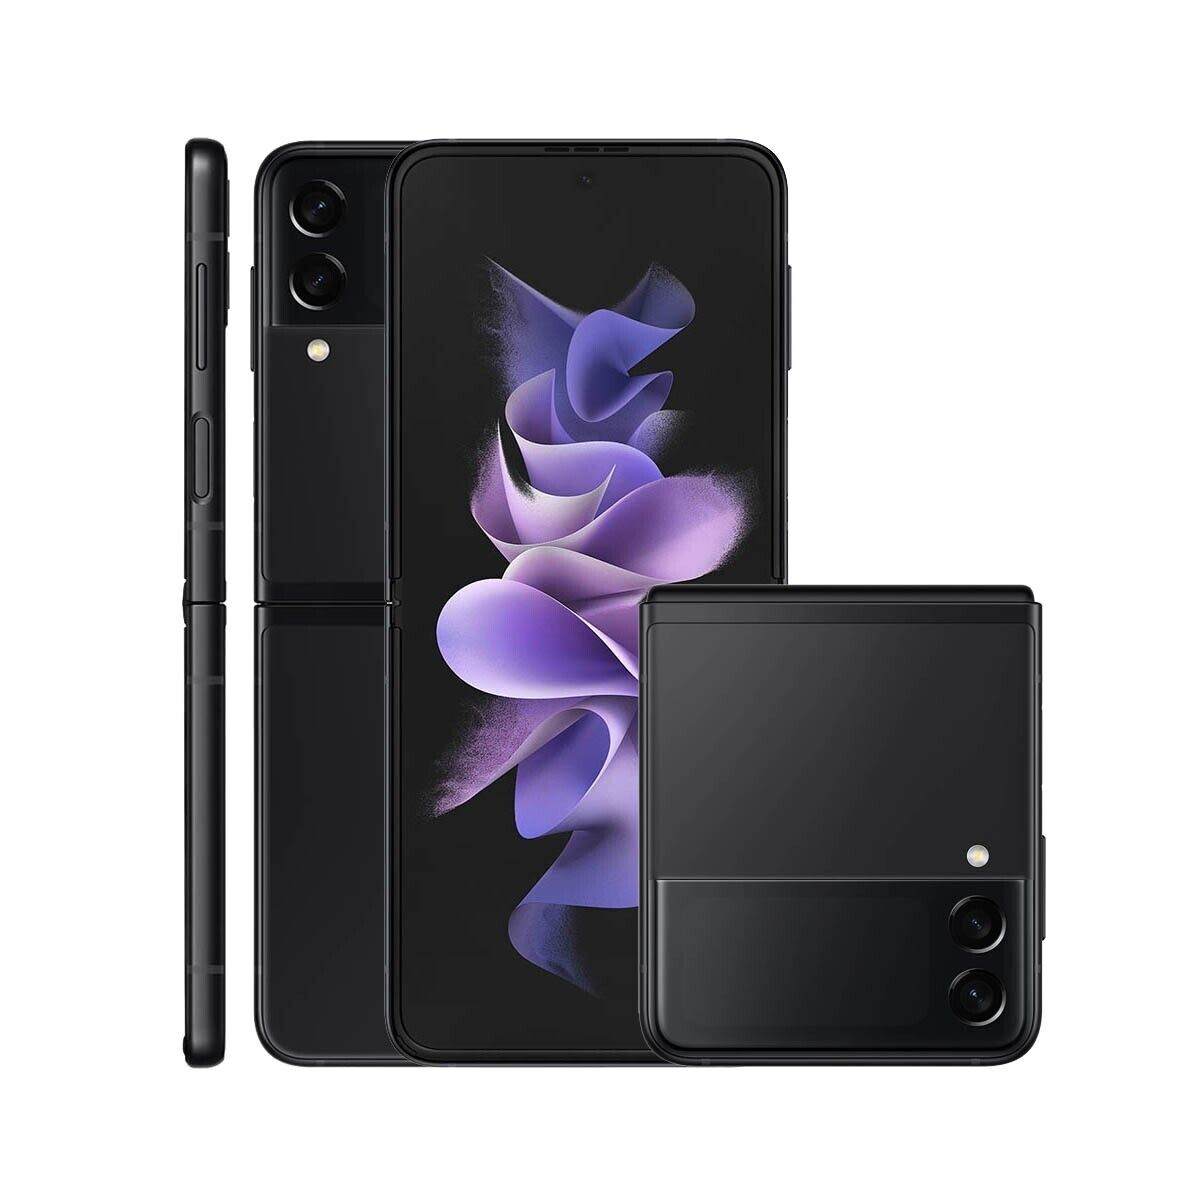 Samsung Folding Smartphone Galaxy Z Flip3 5G 256GB 5G 1.9